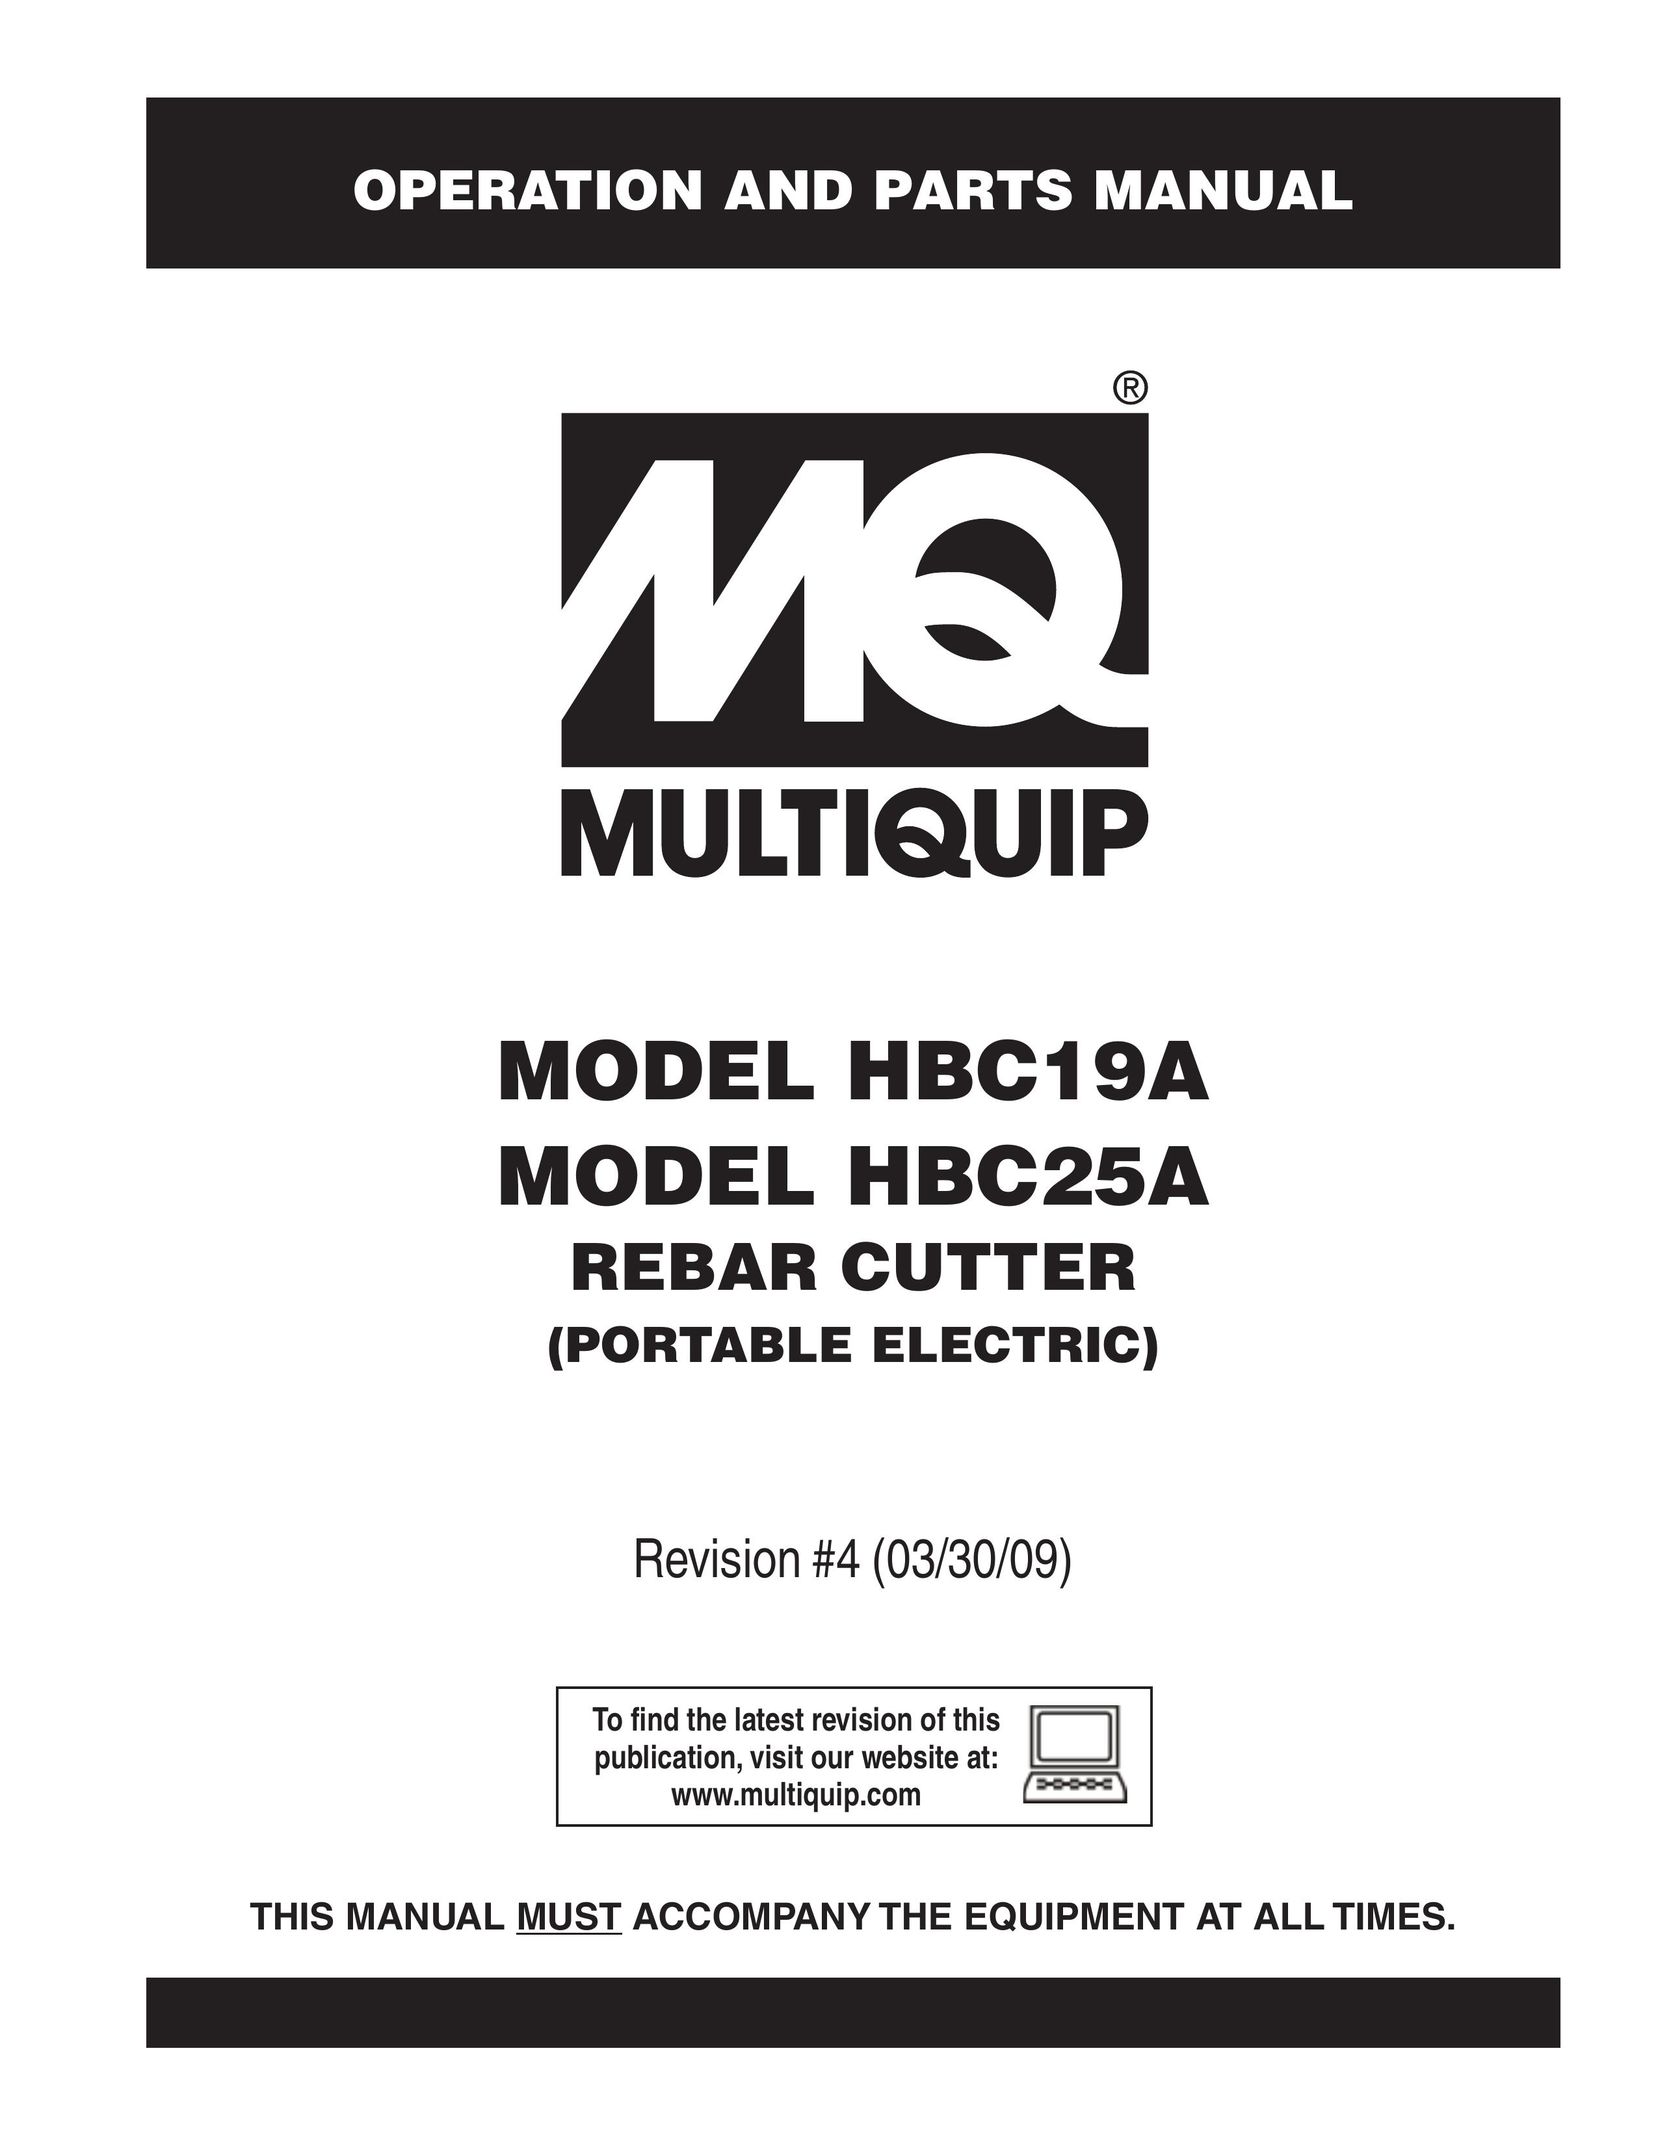 Multiquip HBC25A Doll User Manual